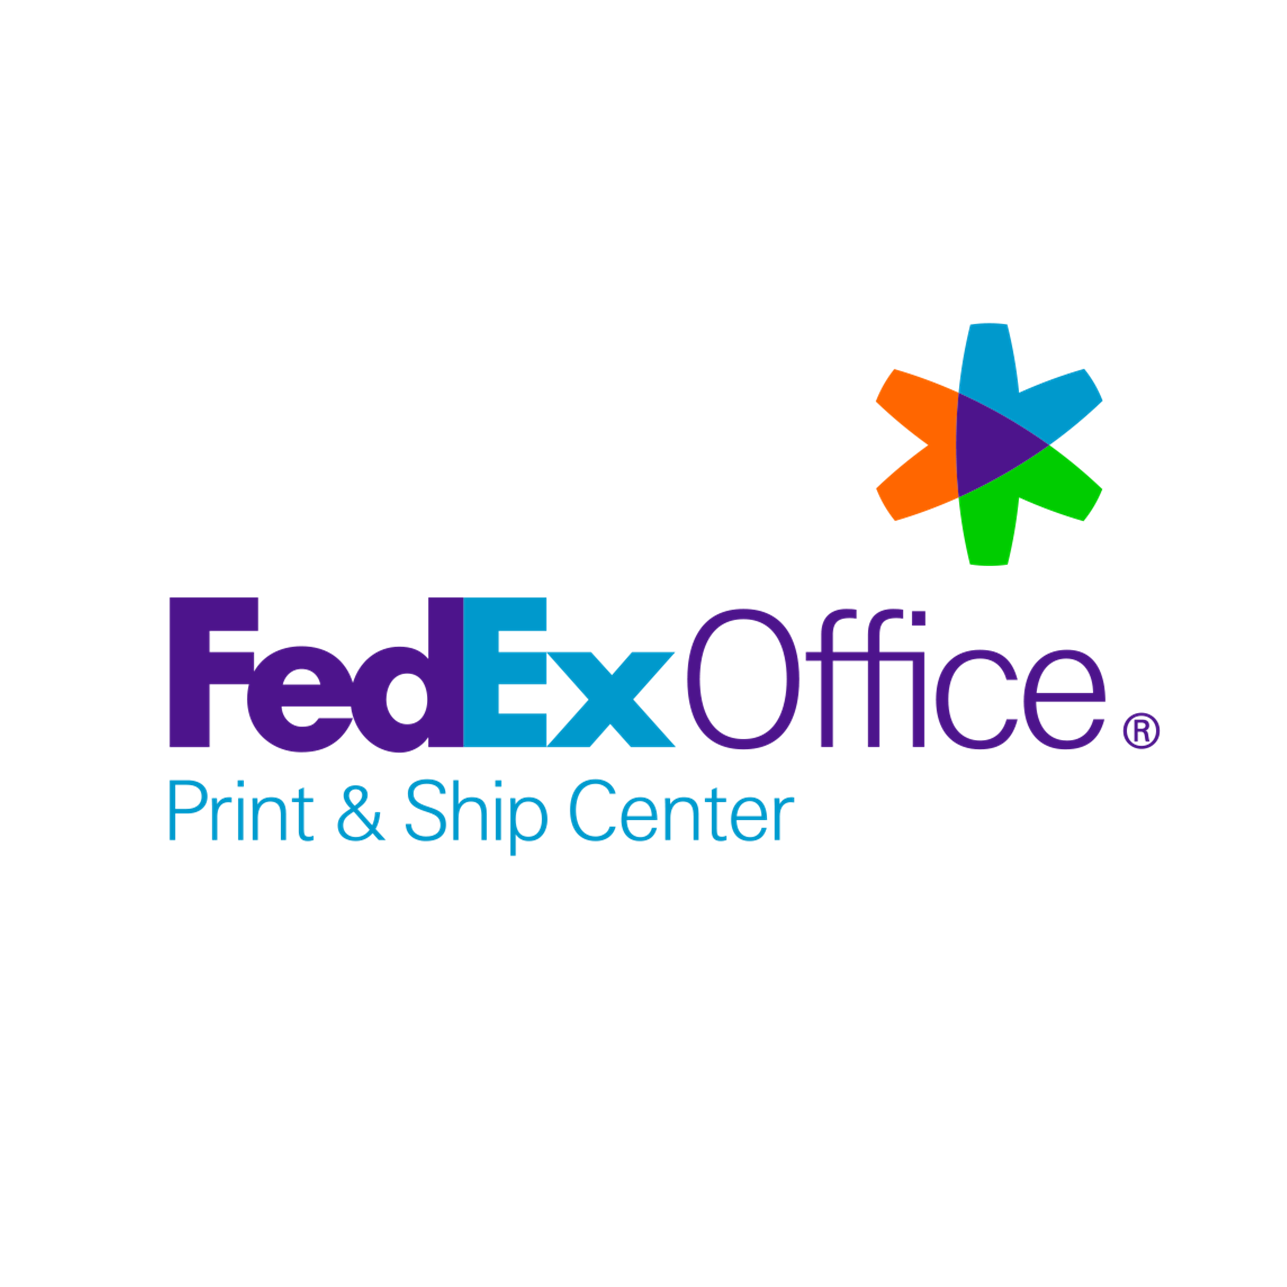 Fedex Office Print U0026 Ship Center - Fedex Office, Transparent background PNG HD thumbnail